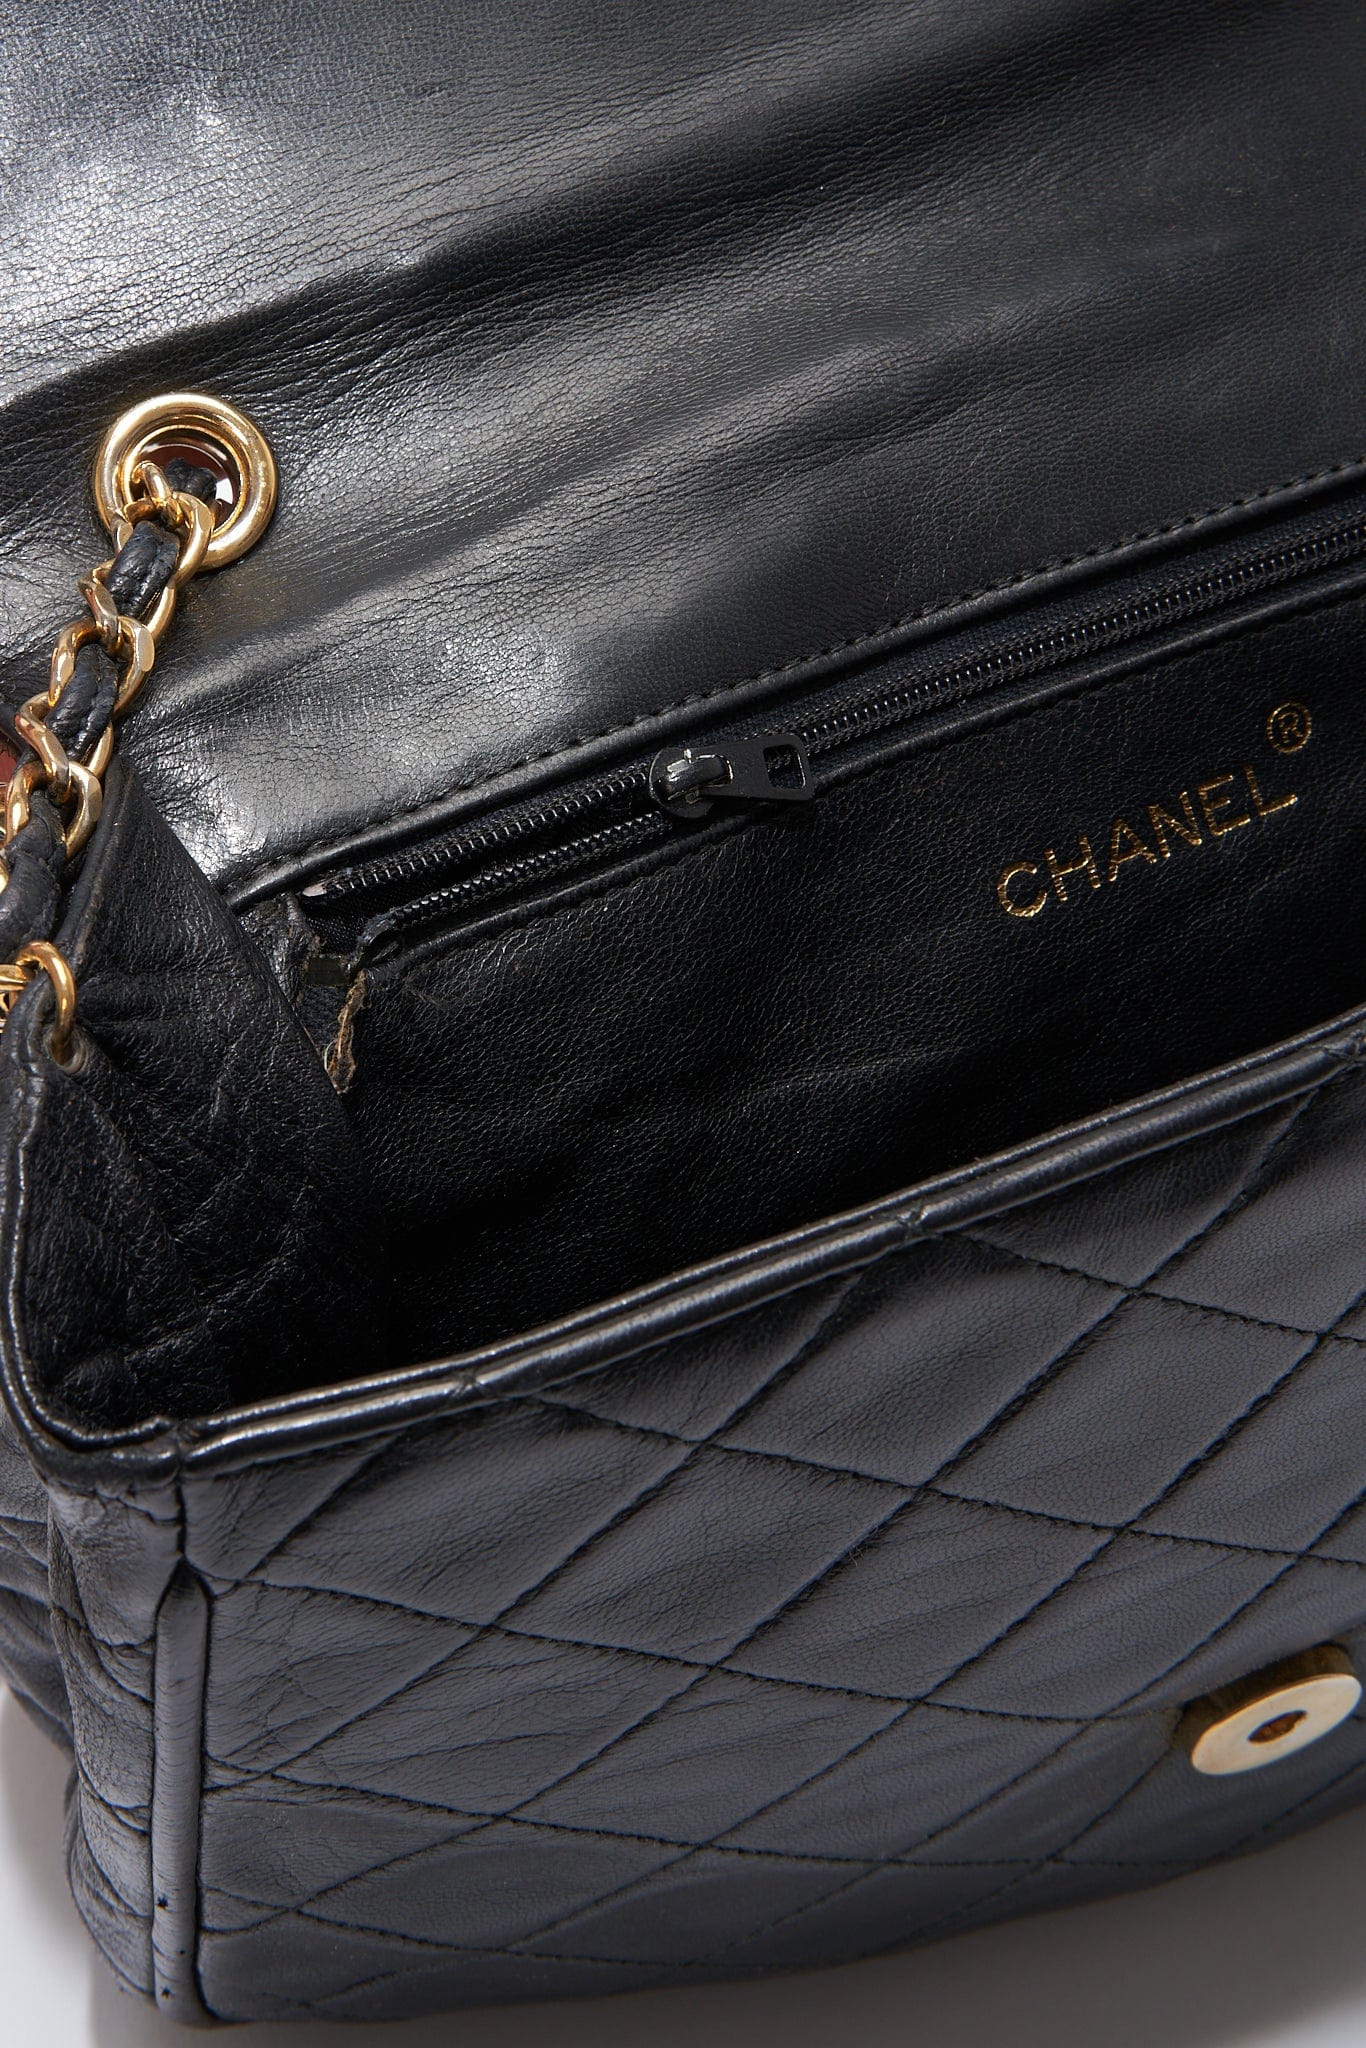 Chanel Classic Full Flap Medium Vintage